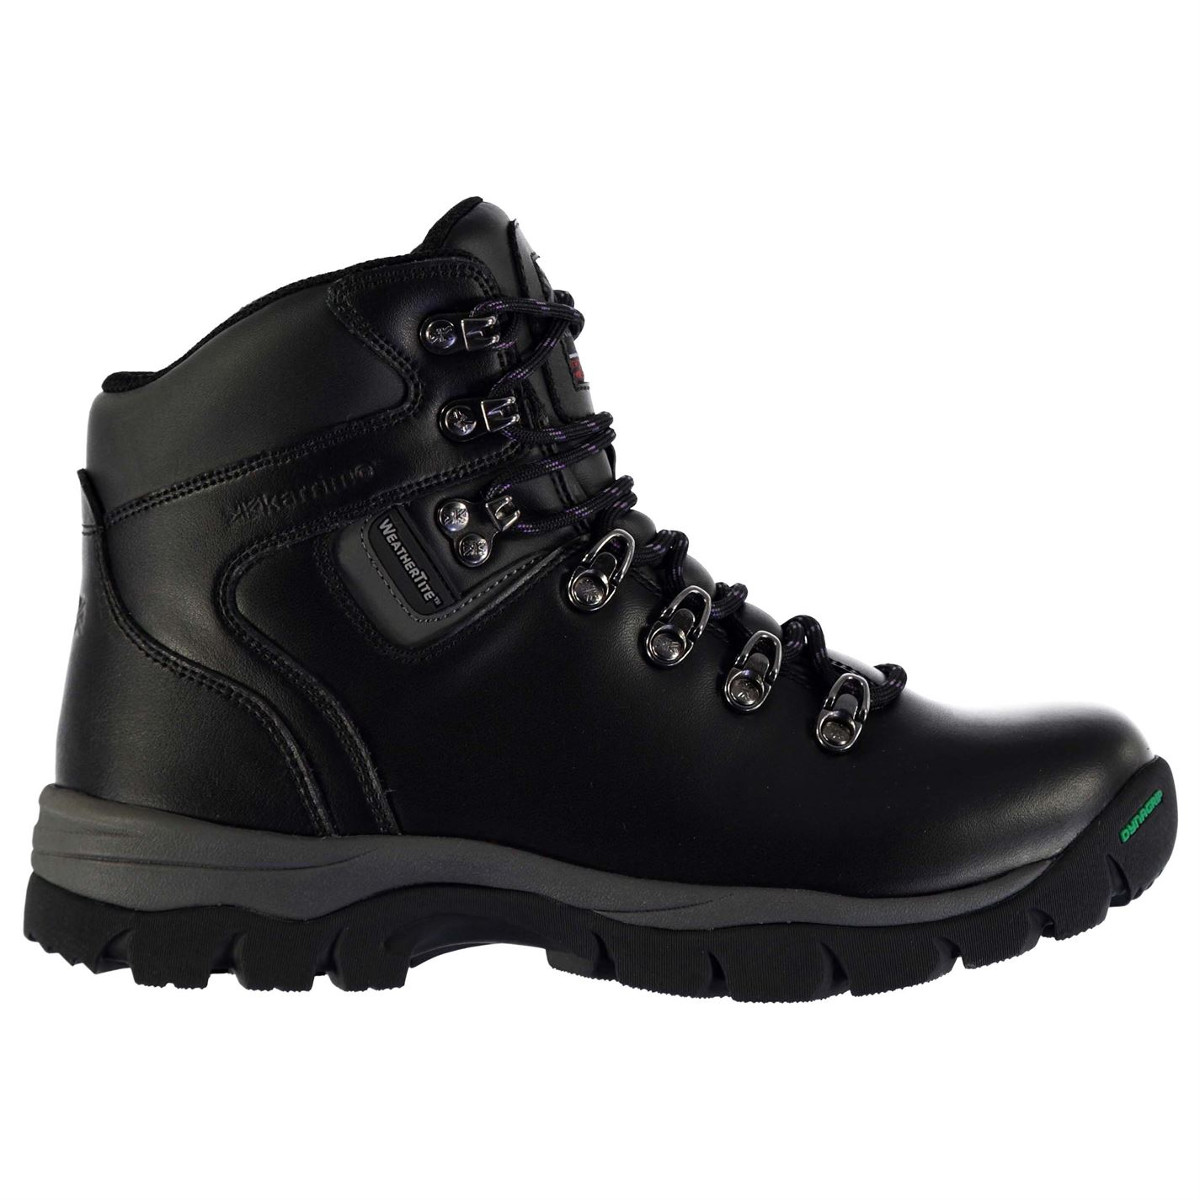 Karrimor Women's Skiddaw Mid Waterproof Hiking Boots - Size 5